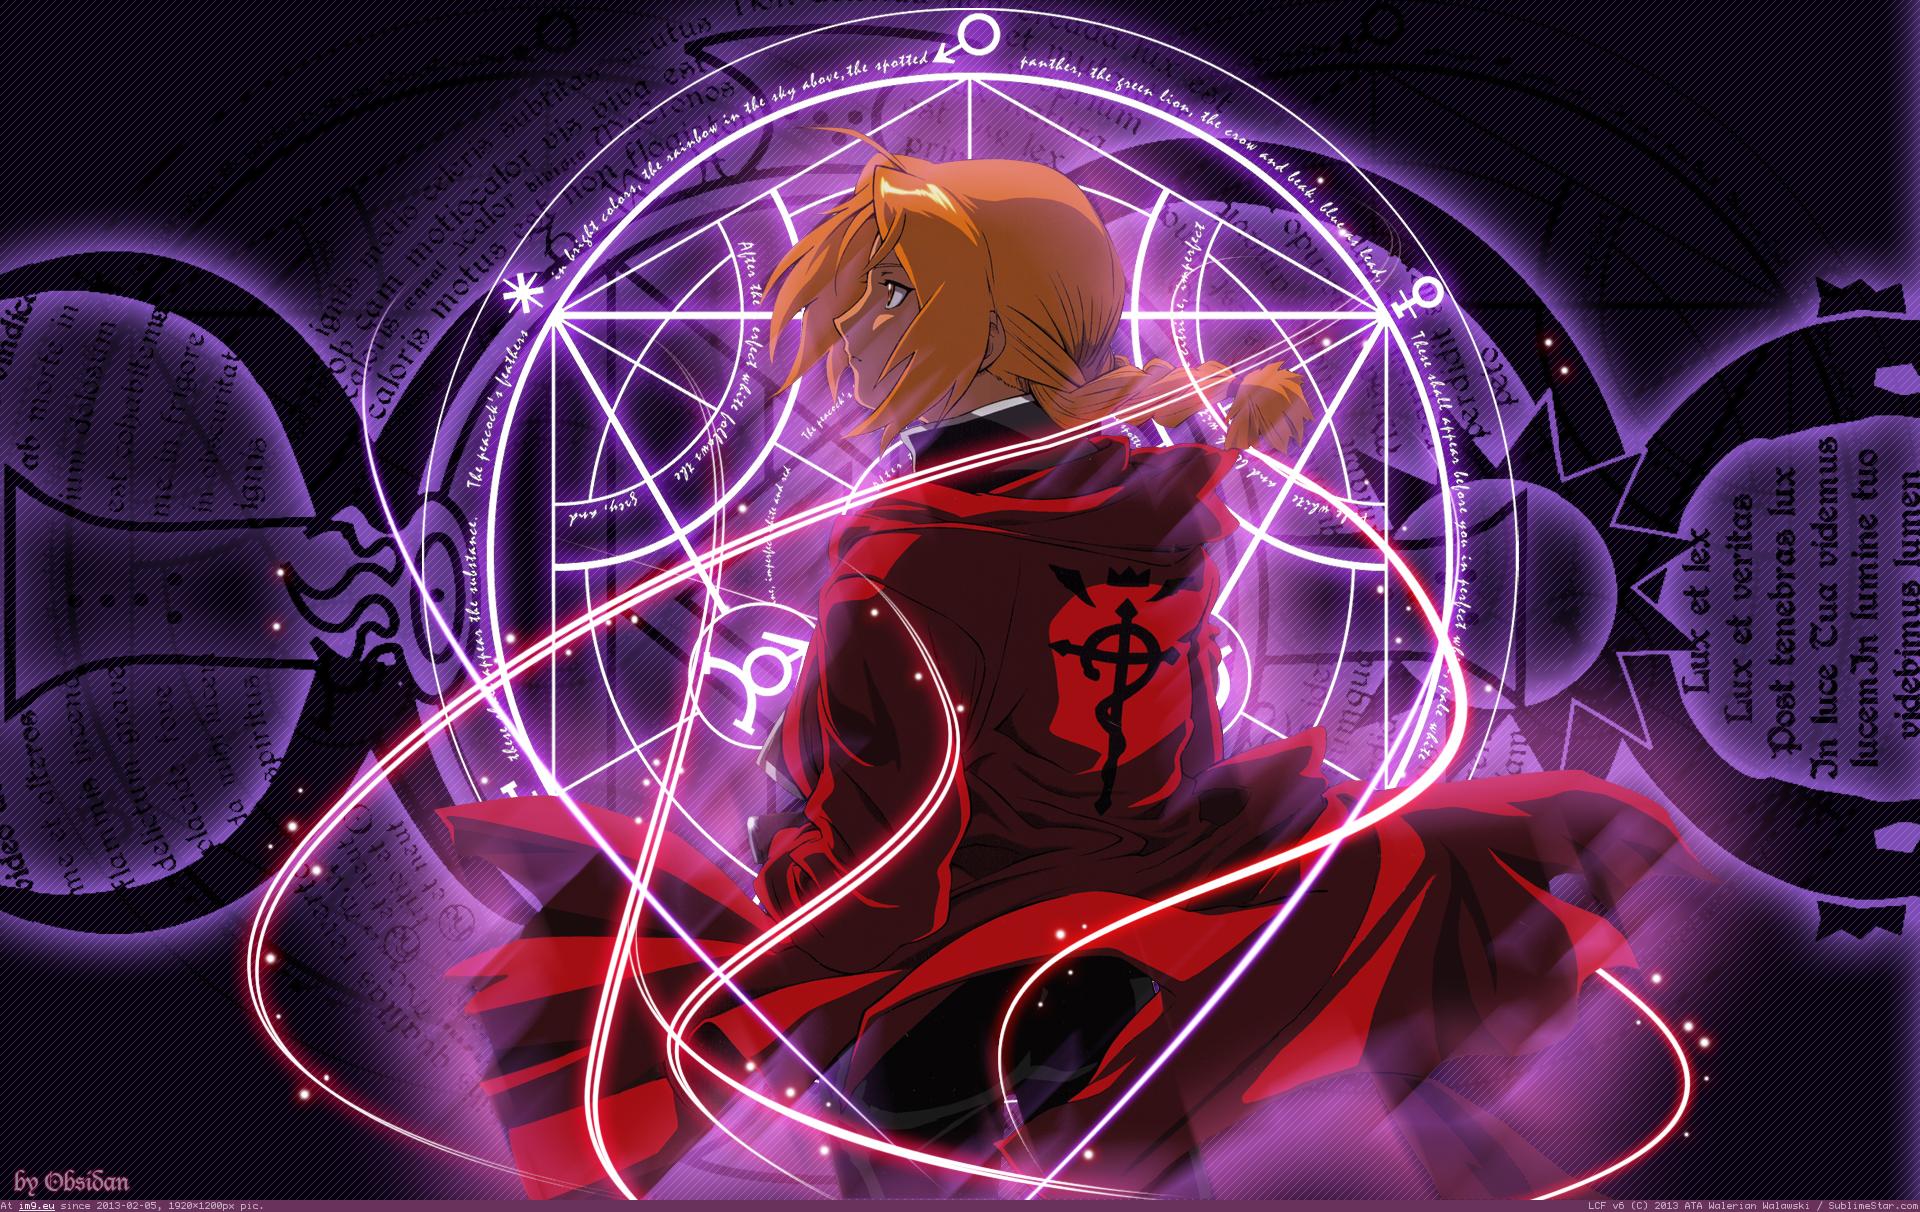 HD wallpaper: Full Metal Alchemist, Full Metal Alchemist Brotherhood, anime